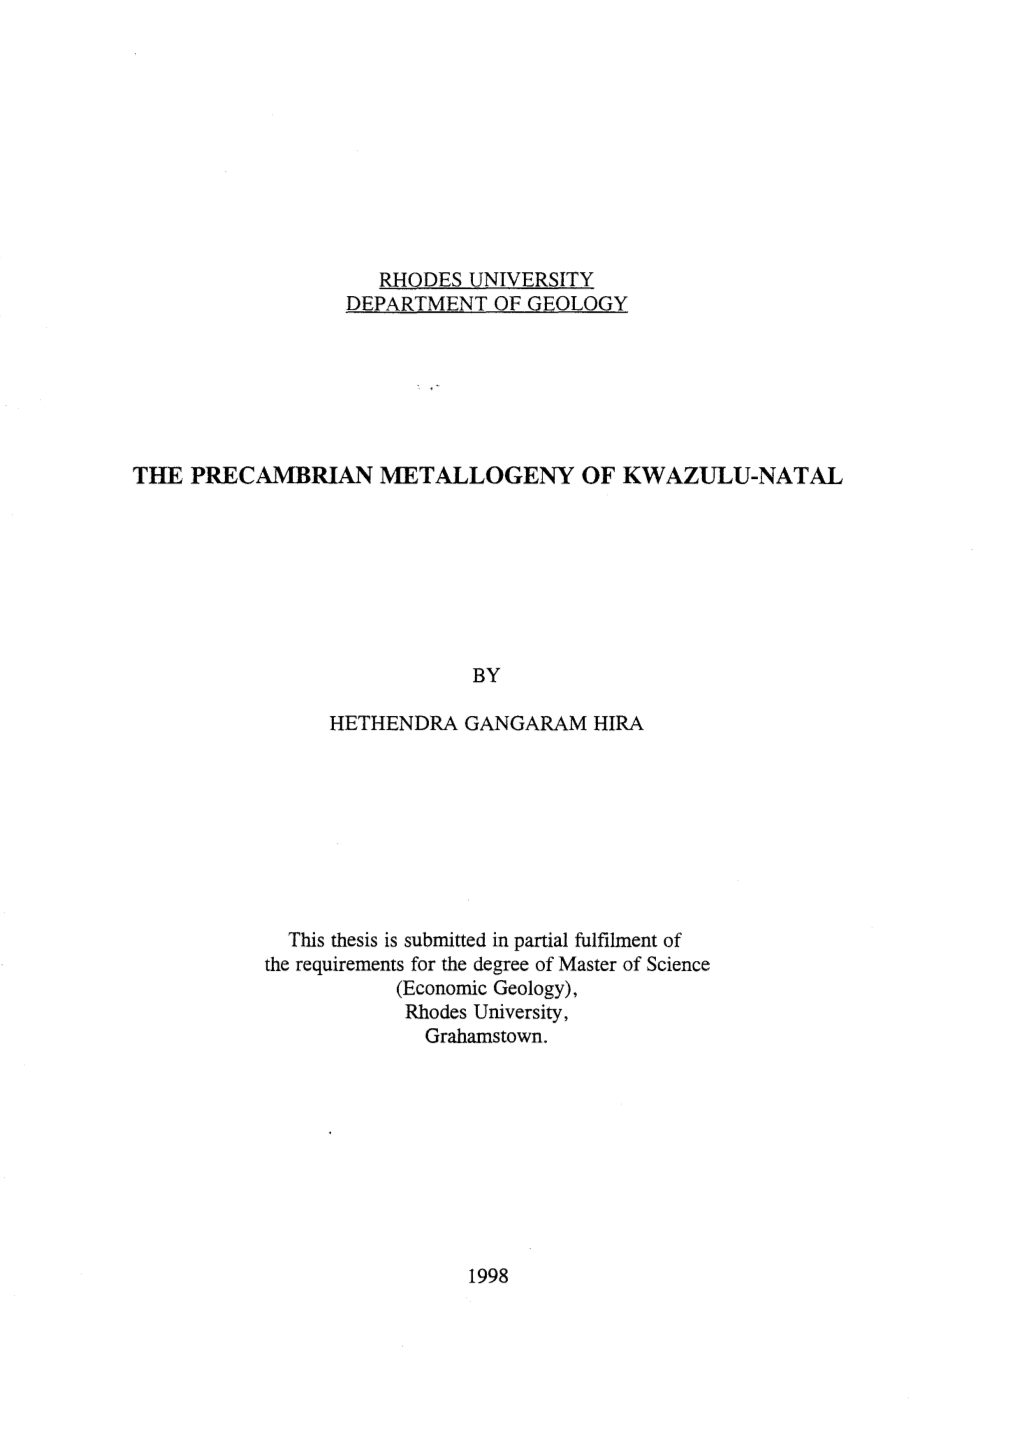 The Precambrian Metallogeny of Kwazulu-Natal